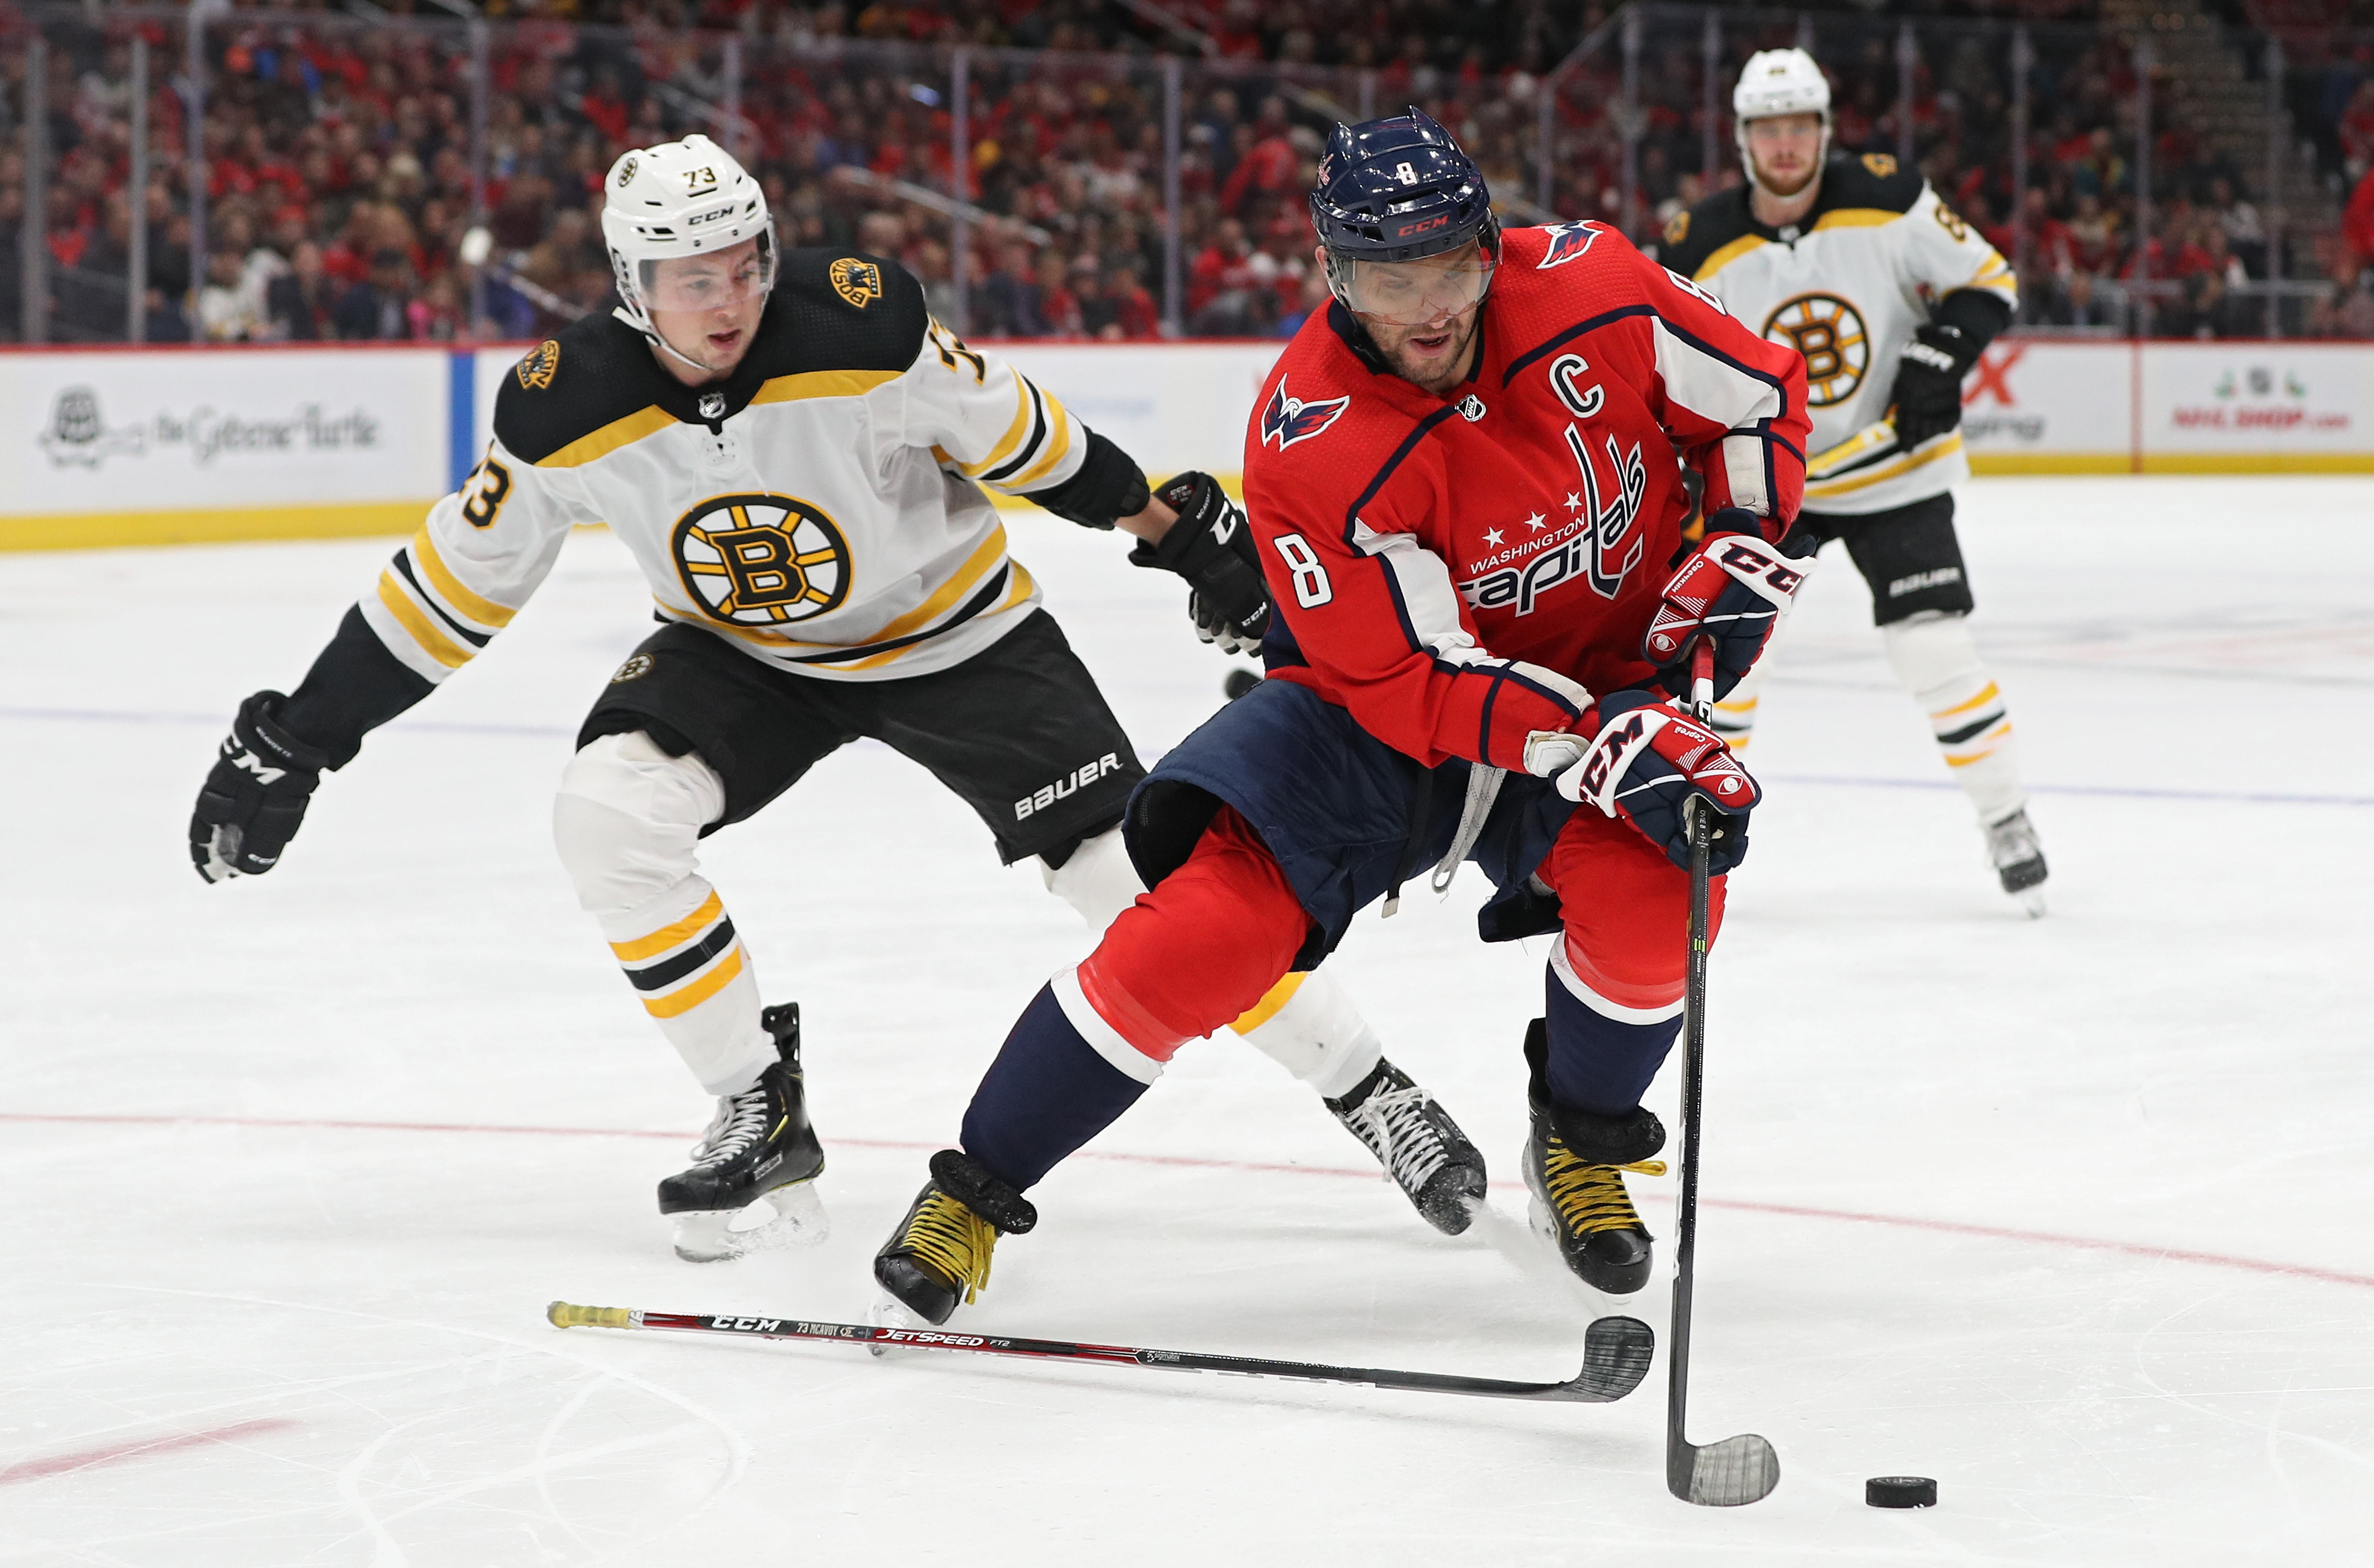 Capitals beat Bruins in showdown between NHL's top two teams